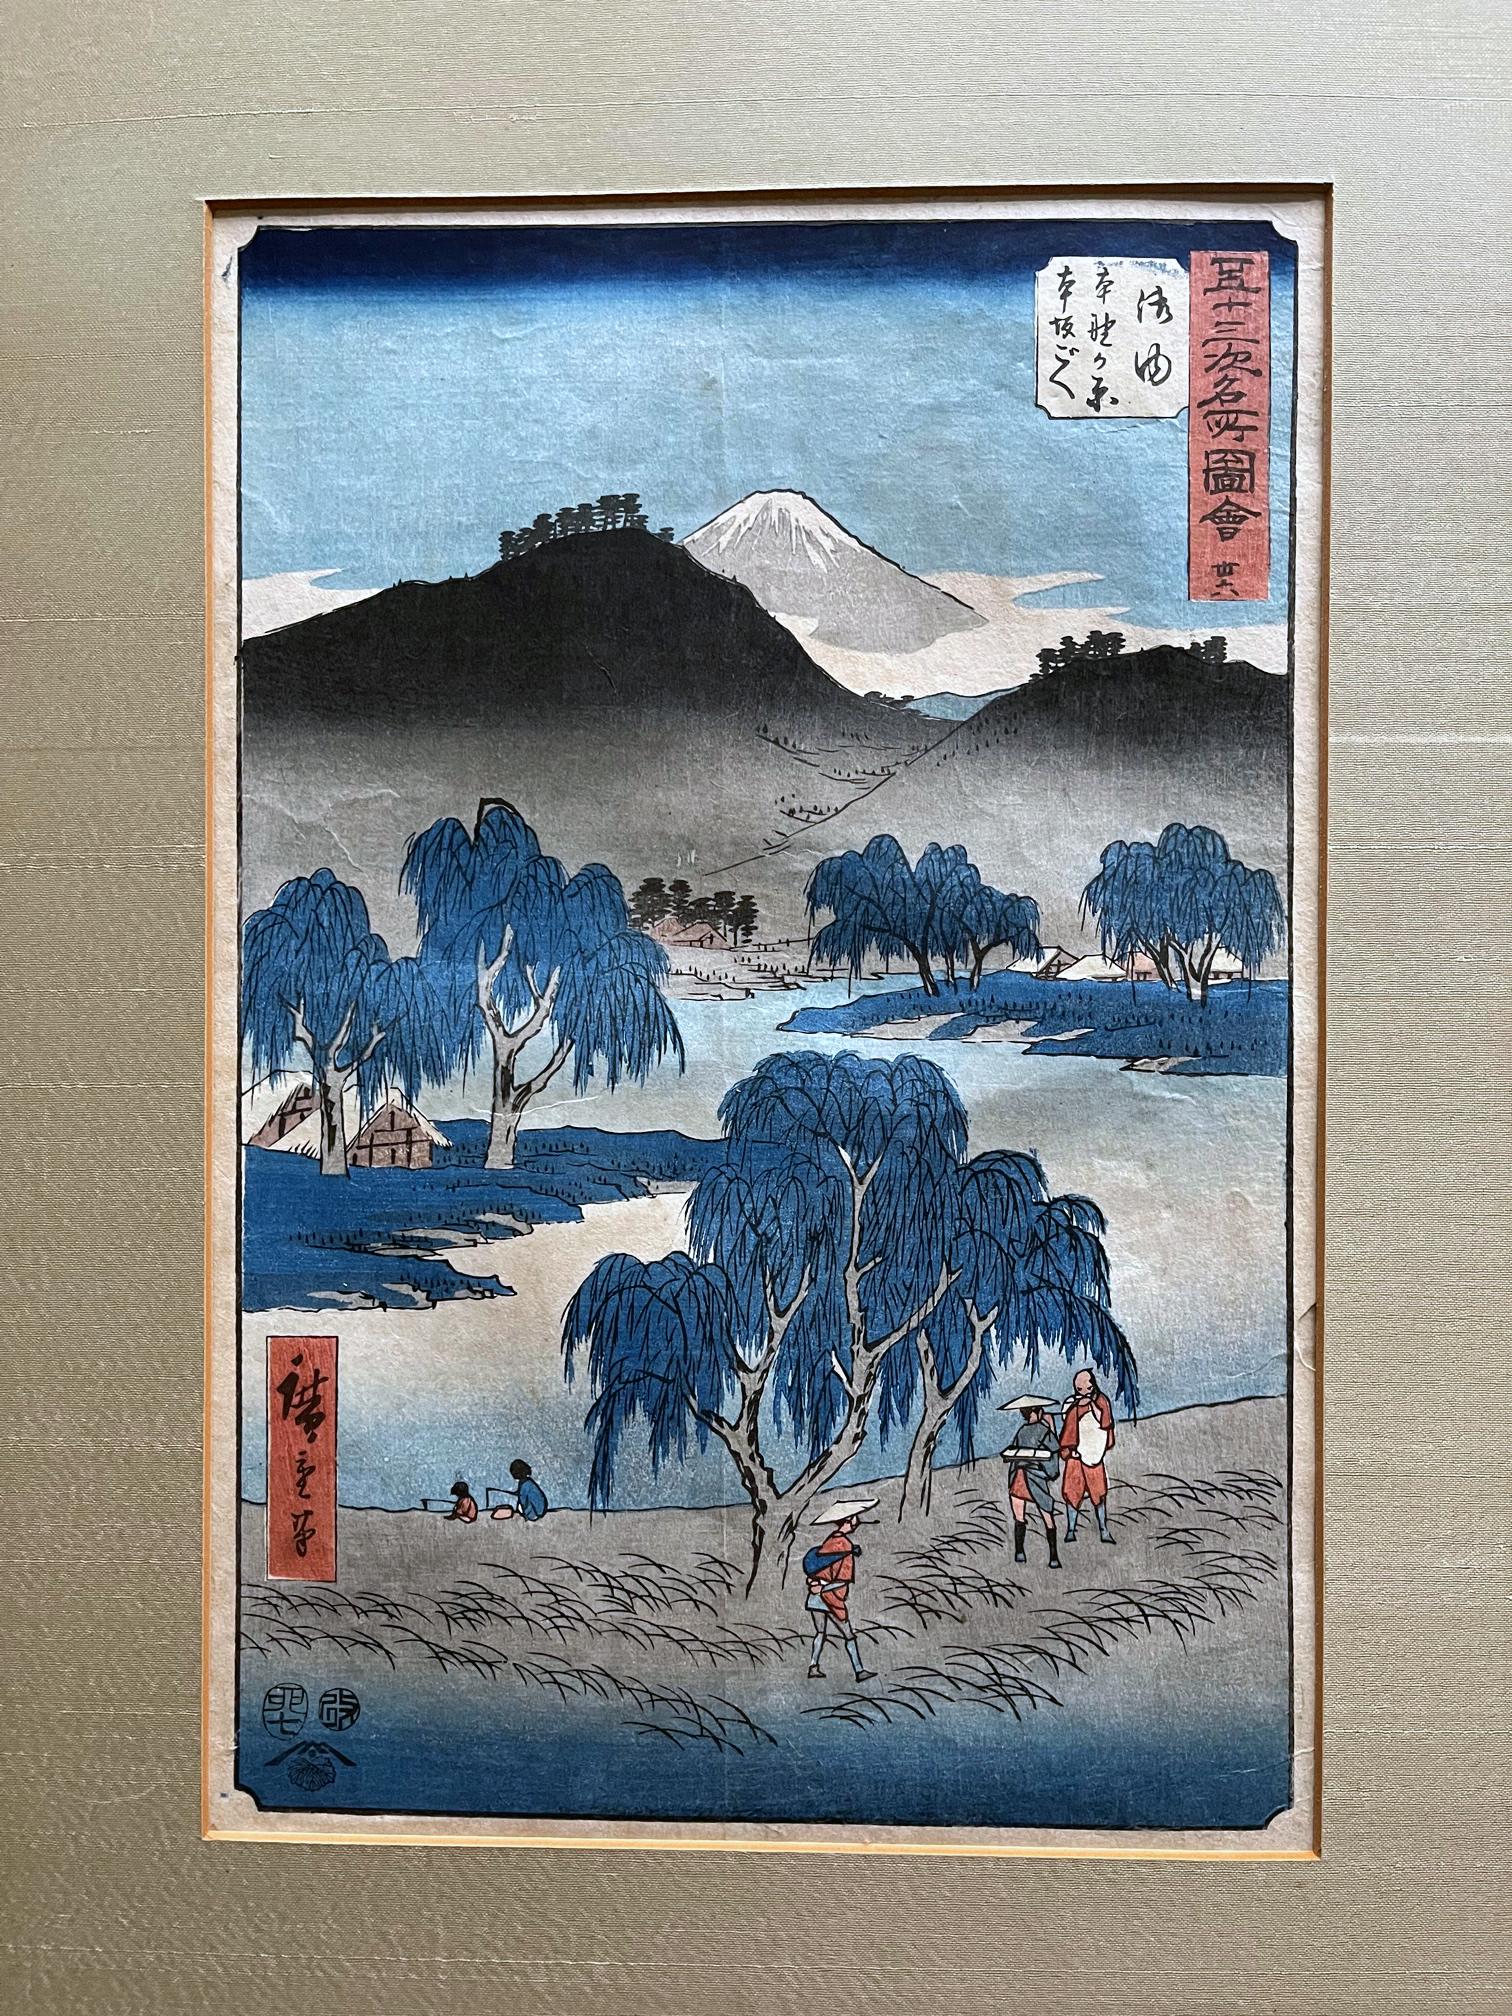 Artist: Utagawa Hiroshige (1797 - 1858)
Series: The Fifty-three Stations of the Tokaido (Upright)
Number: 36 Goyu: Motono-ga-hara and Motozaka Pass
Medium: Woodblock Print
Date: 1855
Format: Vertical oban
Number of Prints: 55/55
Size (H x W):